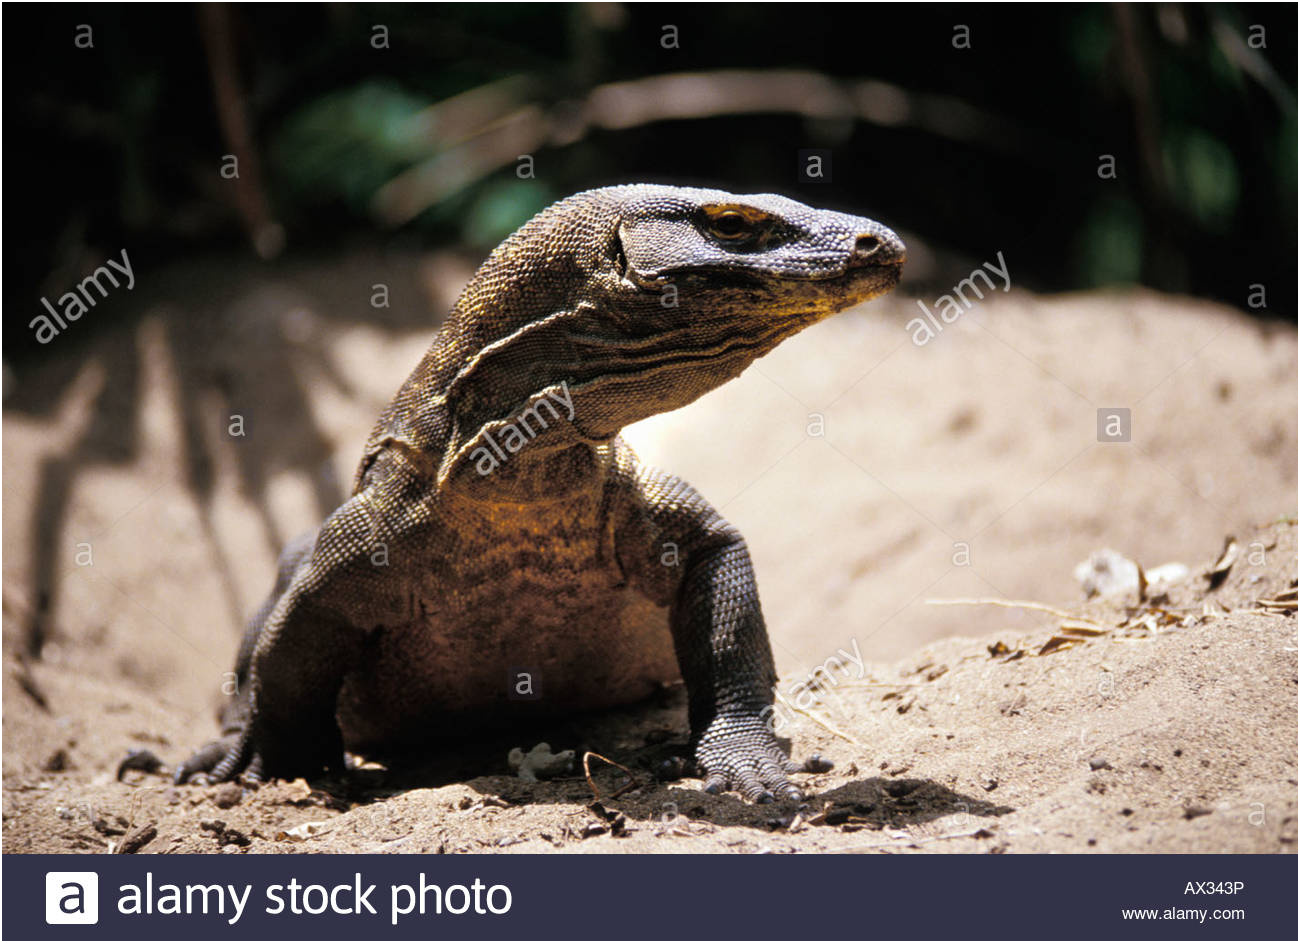 stock photo portrait de varan de komodo indon sie komodo dragon in natural environment